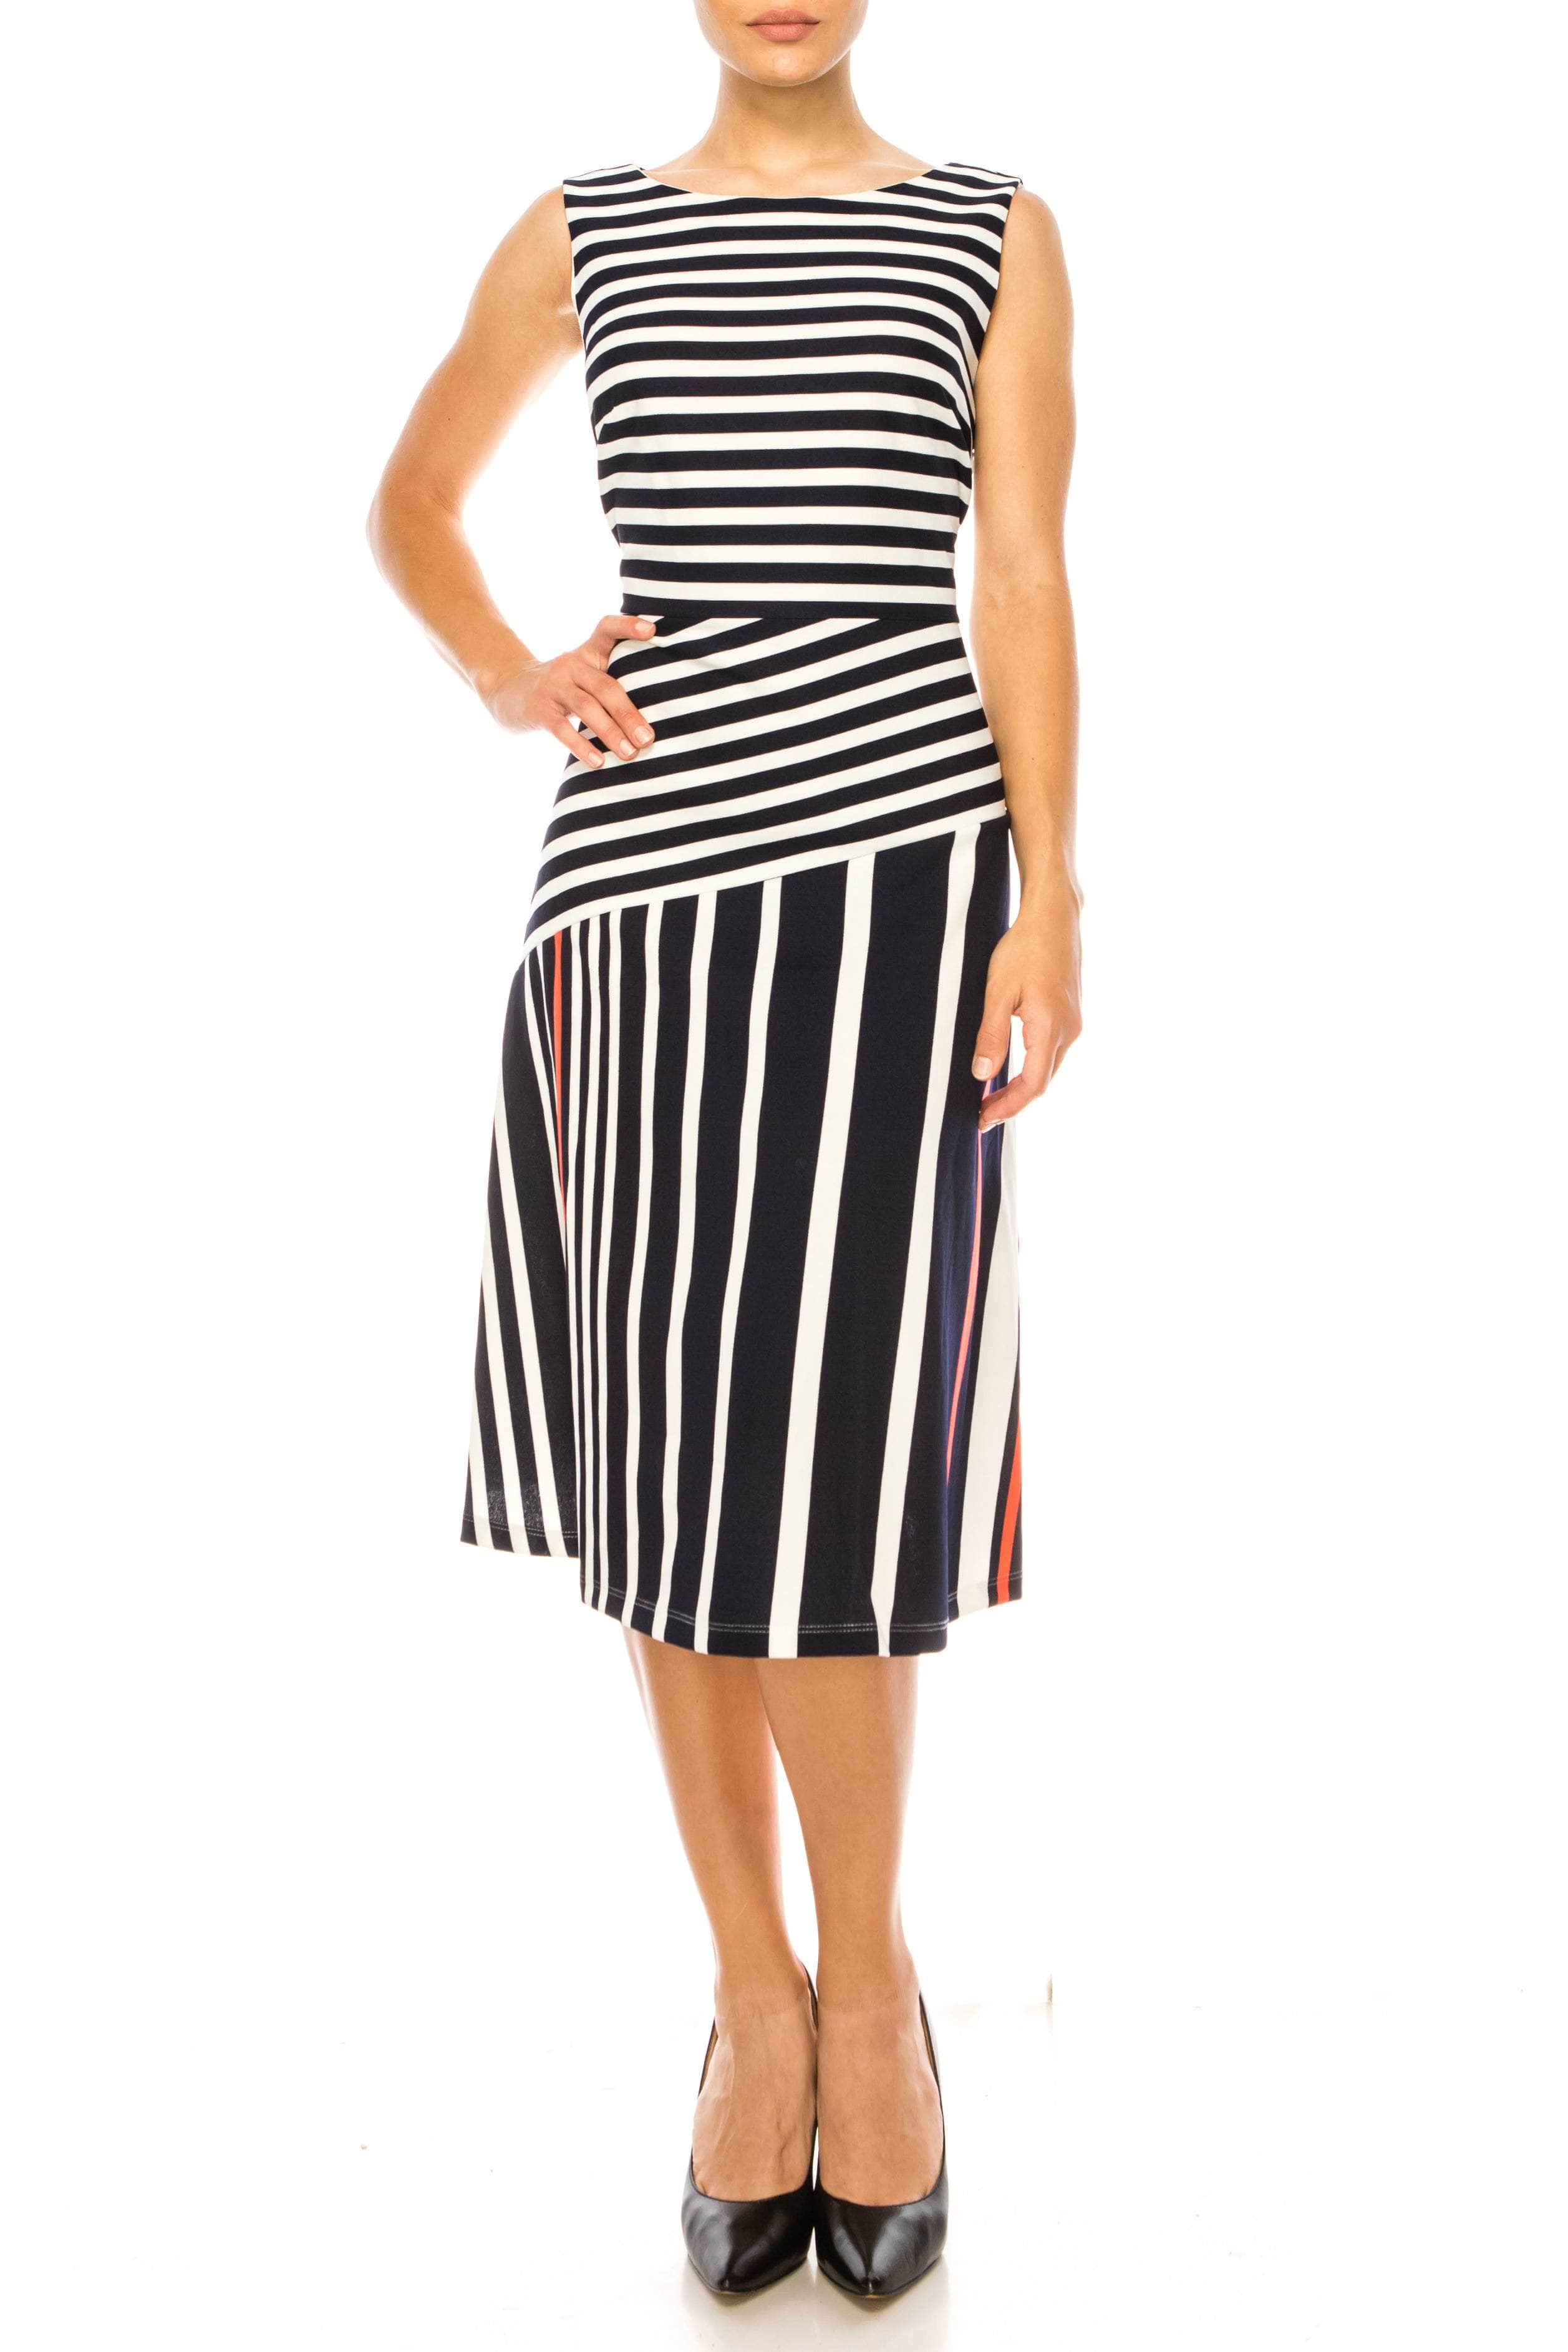 ILE Clothing SCP1326 - Stripe A-Line Dress